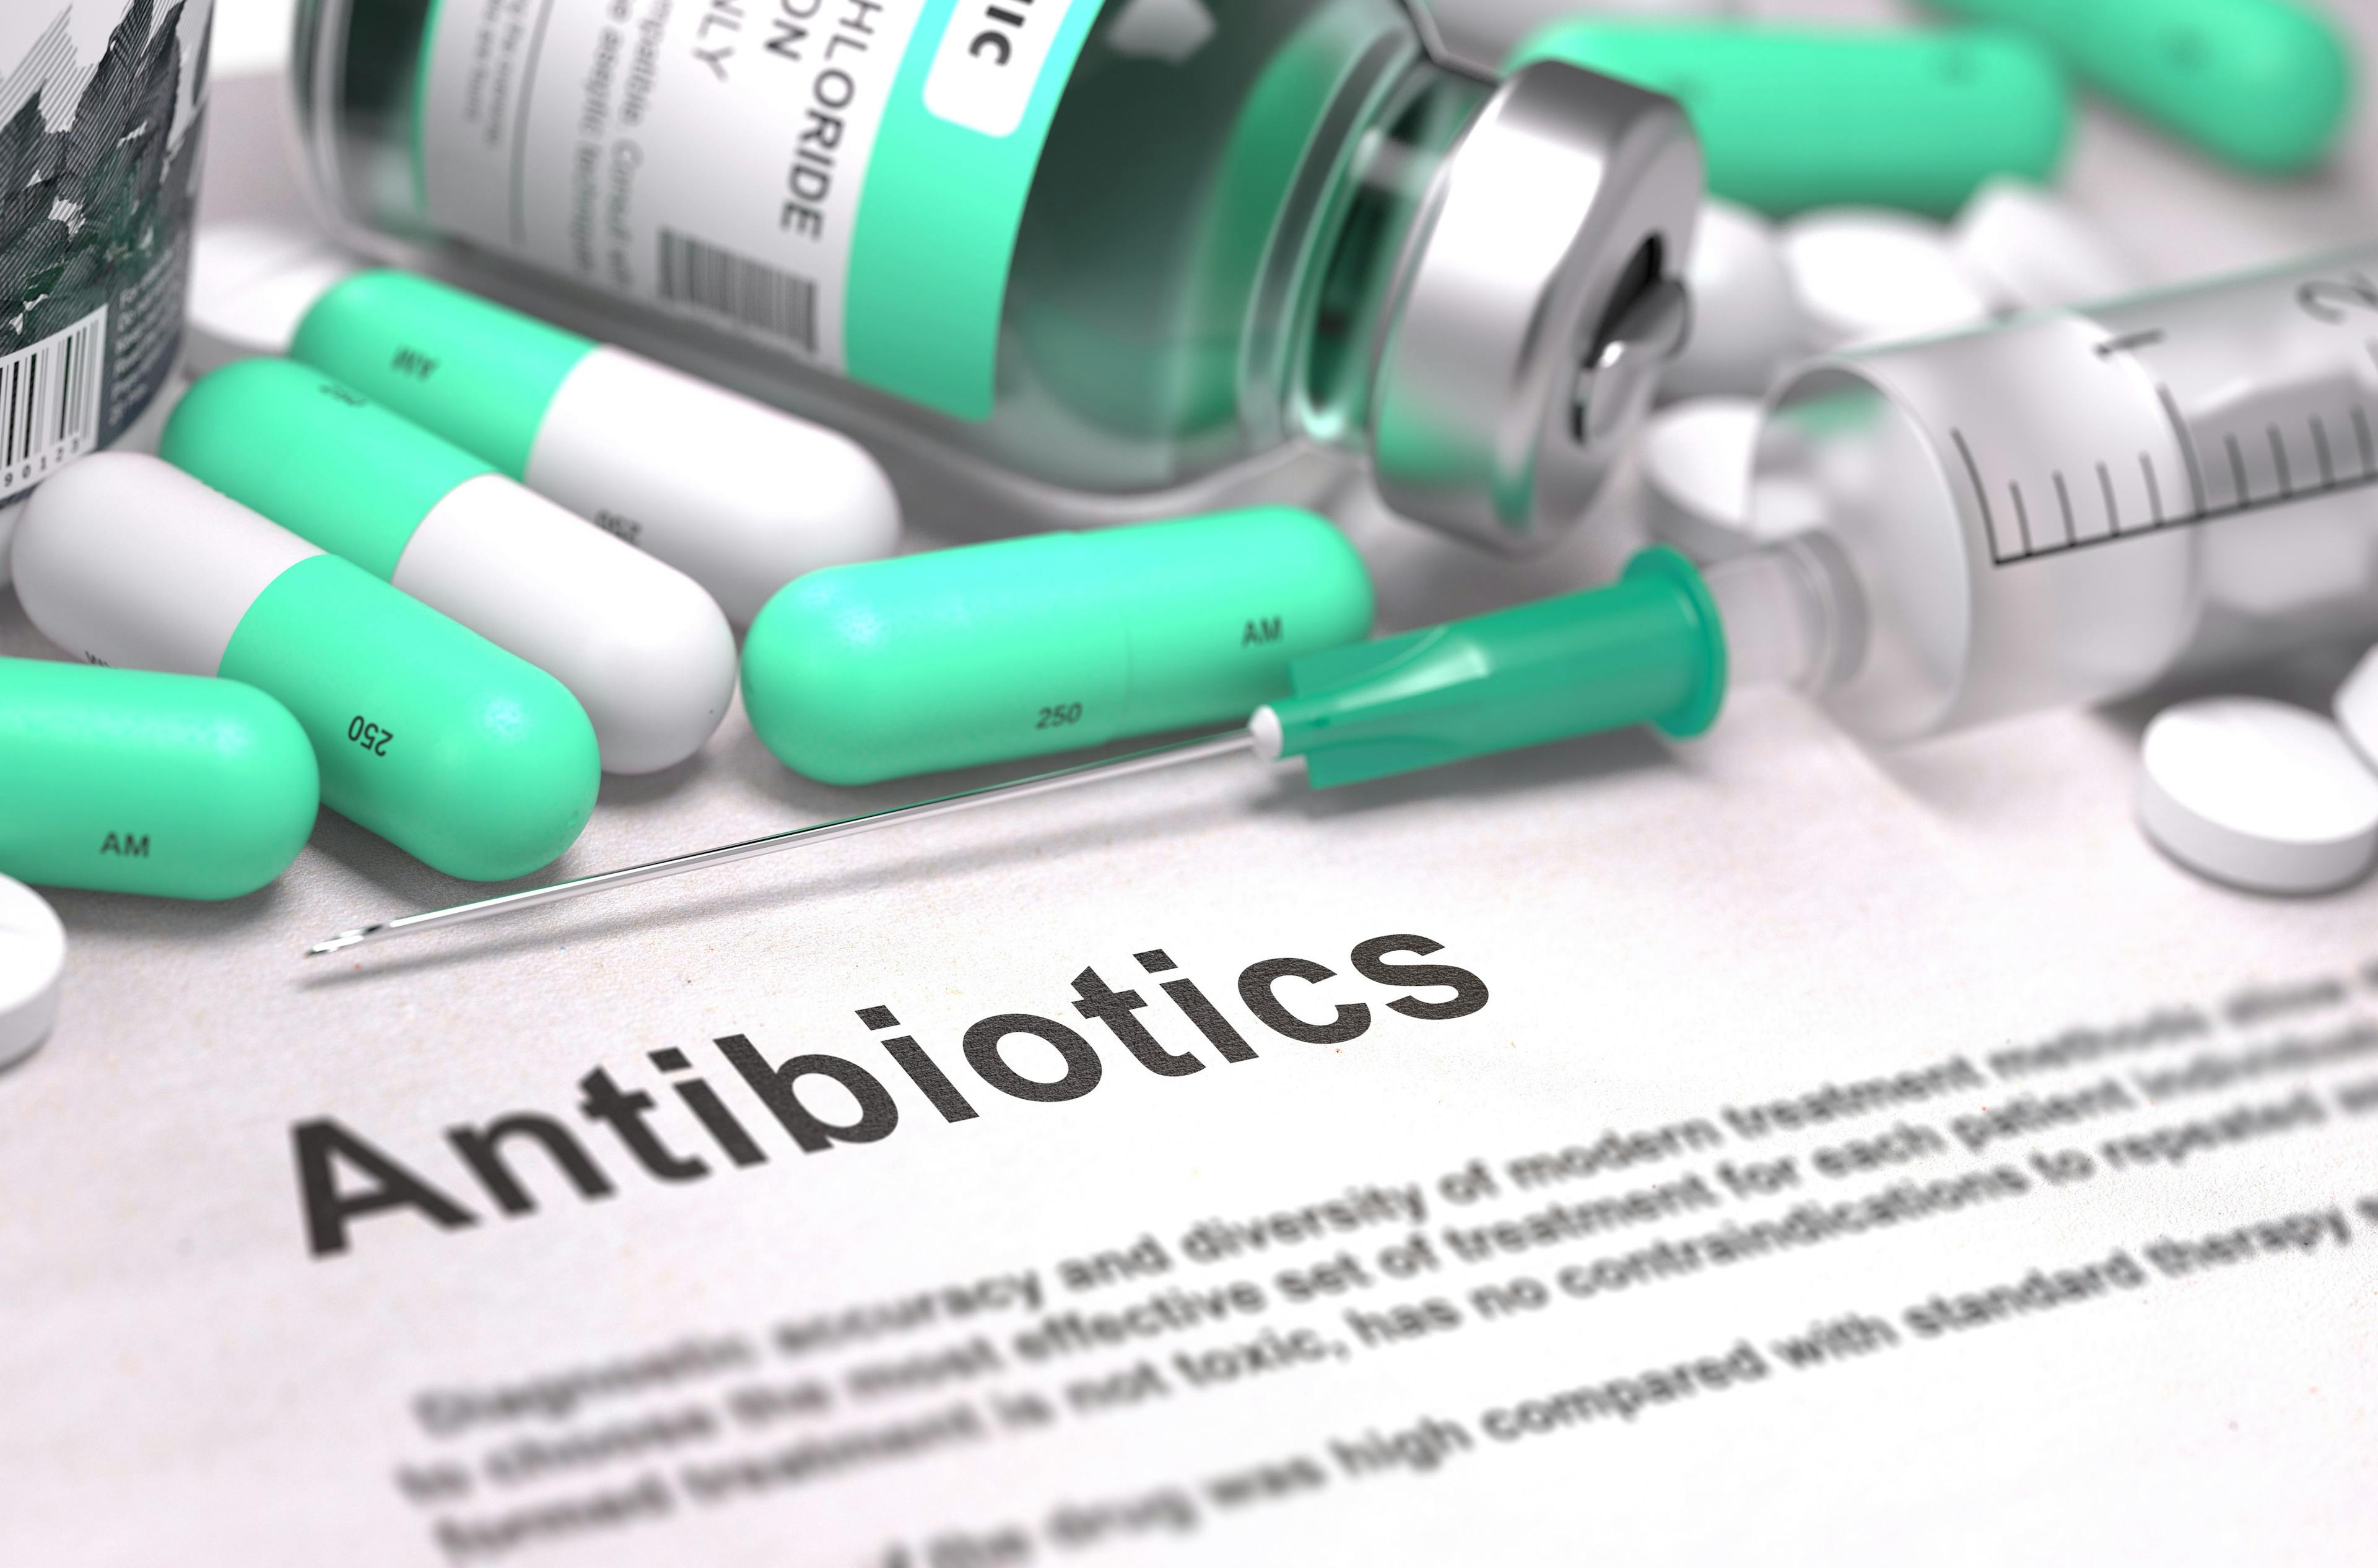 Antibiotics | Image credit: tashatuvango - stock.adobe.com